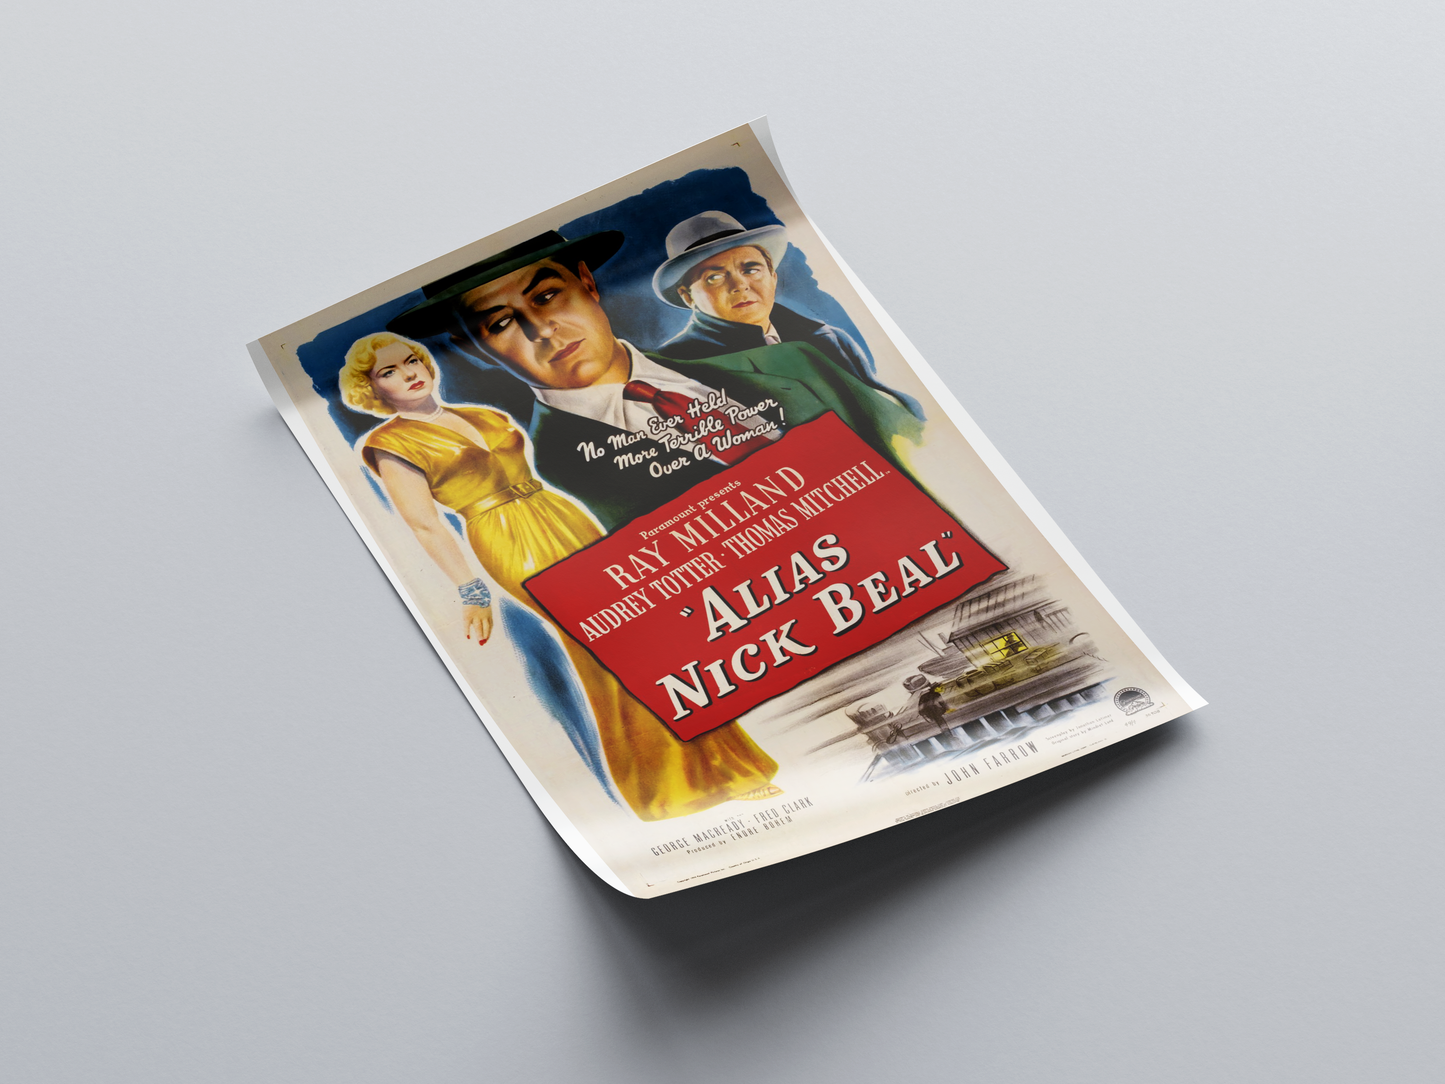 Alias Nick Beal (1949) Movie Poster displayed in interior setting